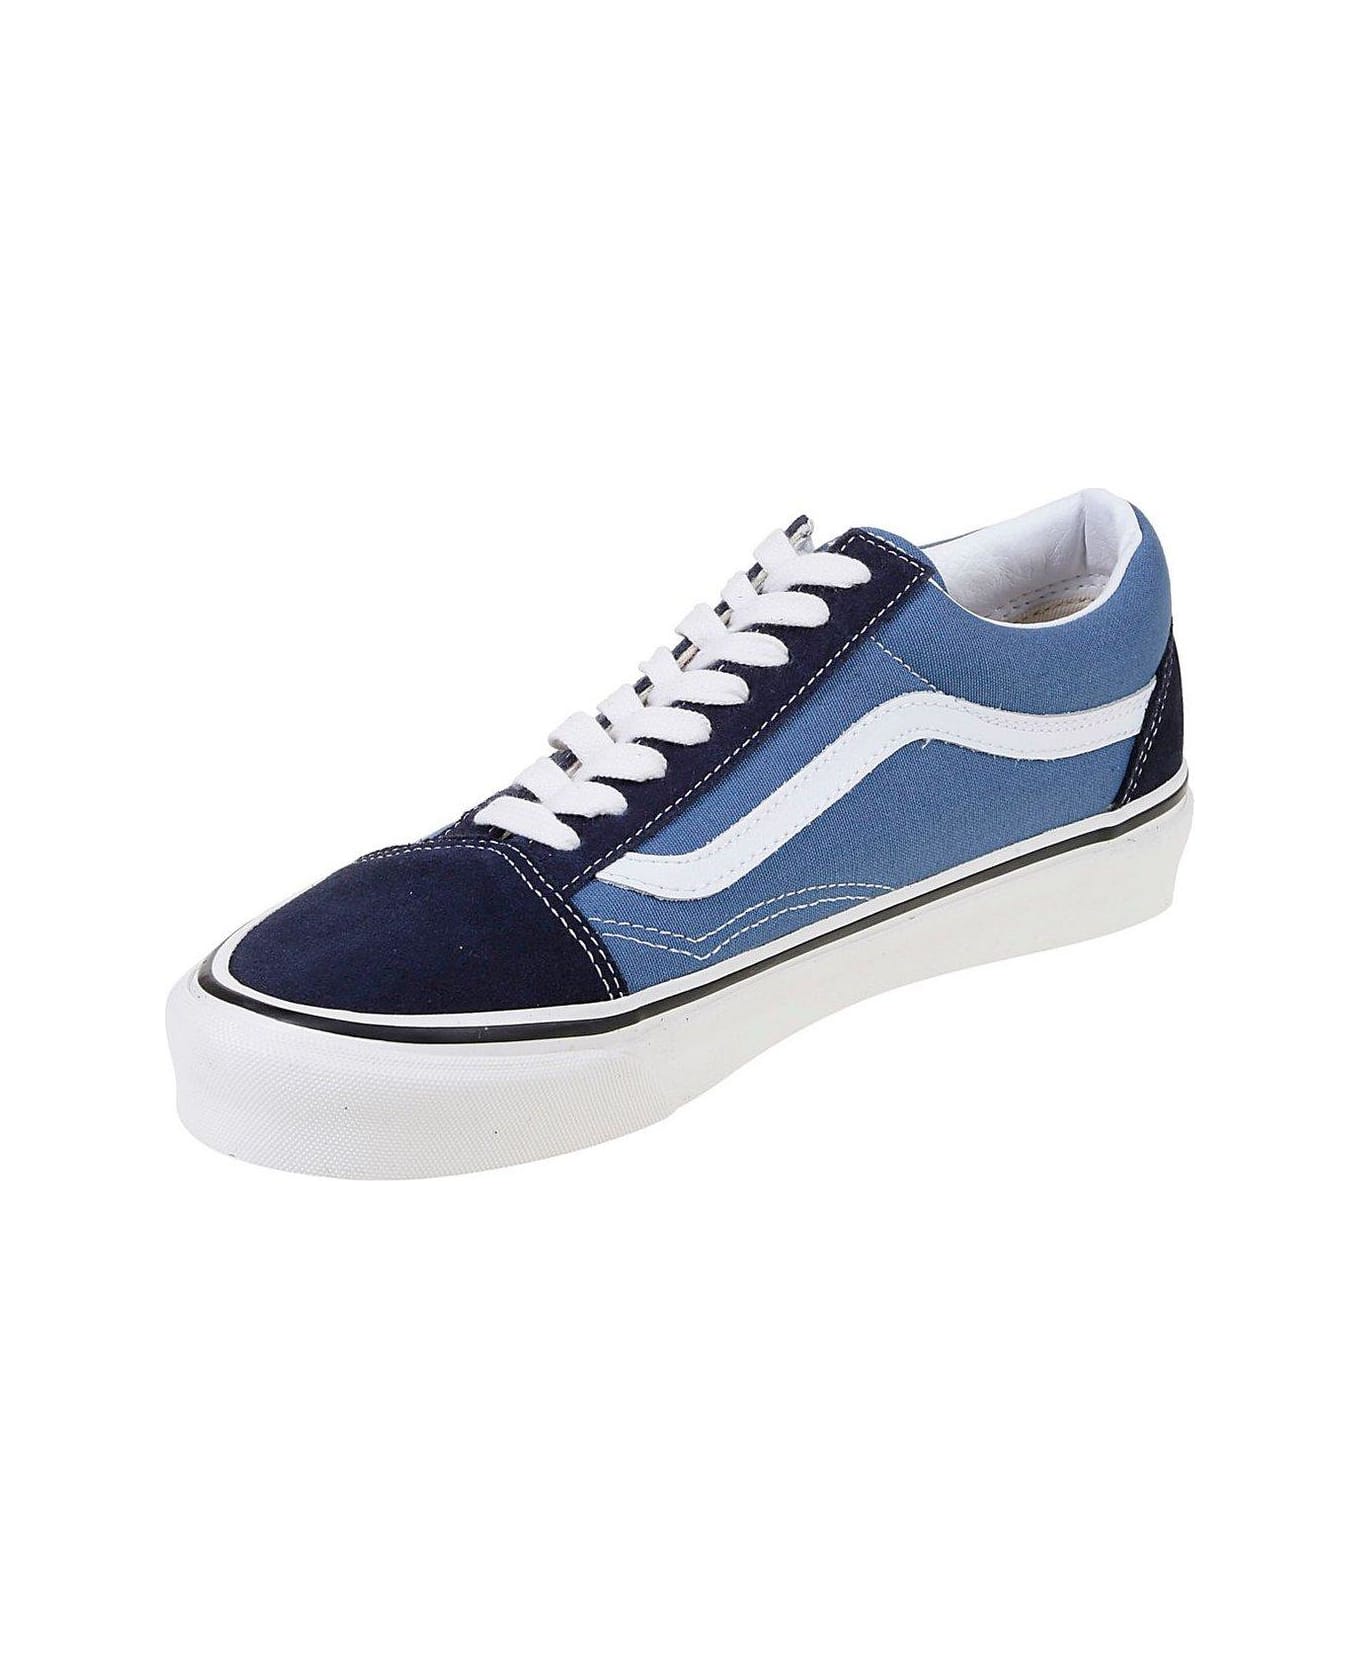 Vans Old Skool 36 Dx Lace-up Sneakers - LIGHT BLUE